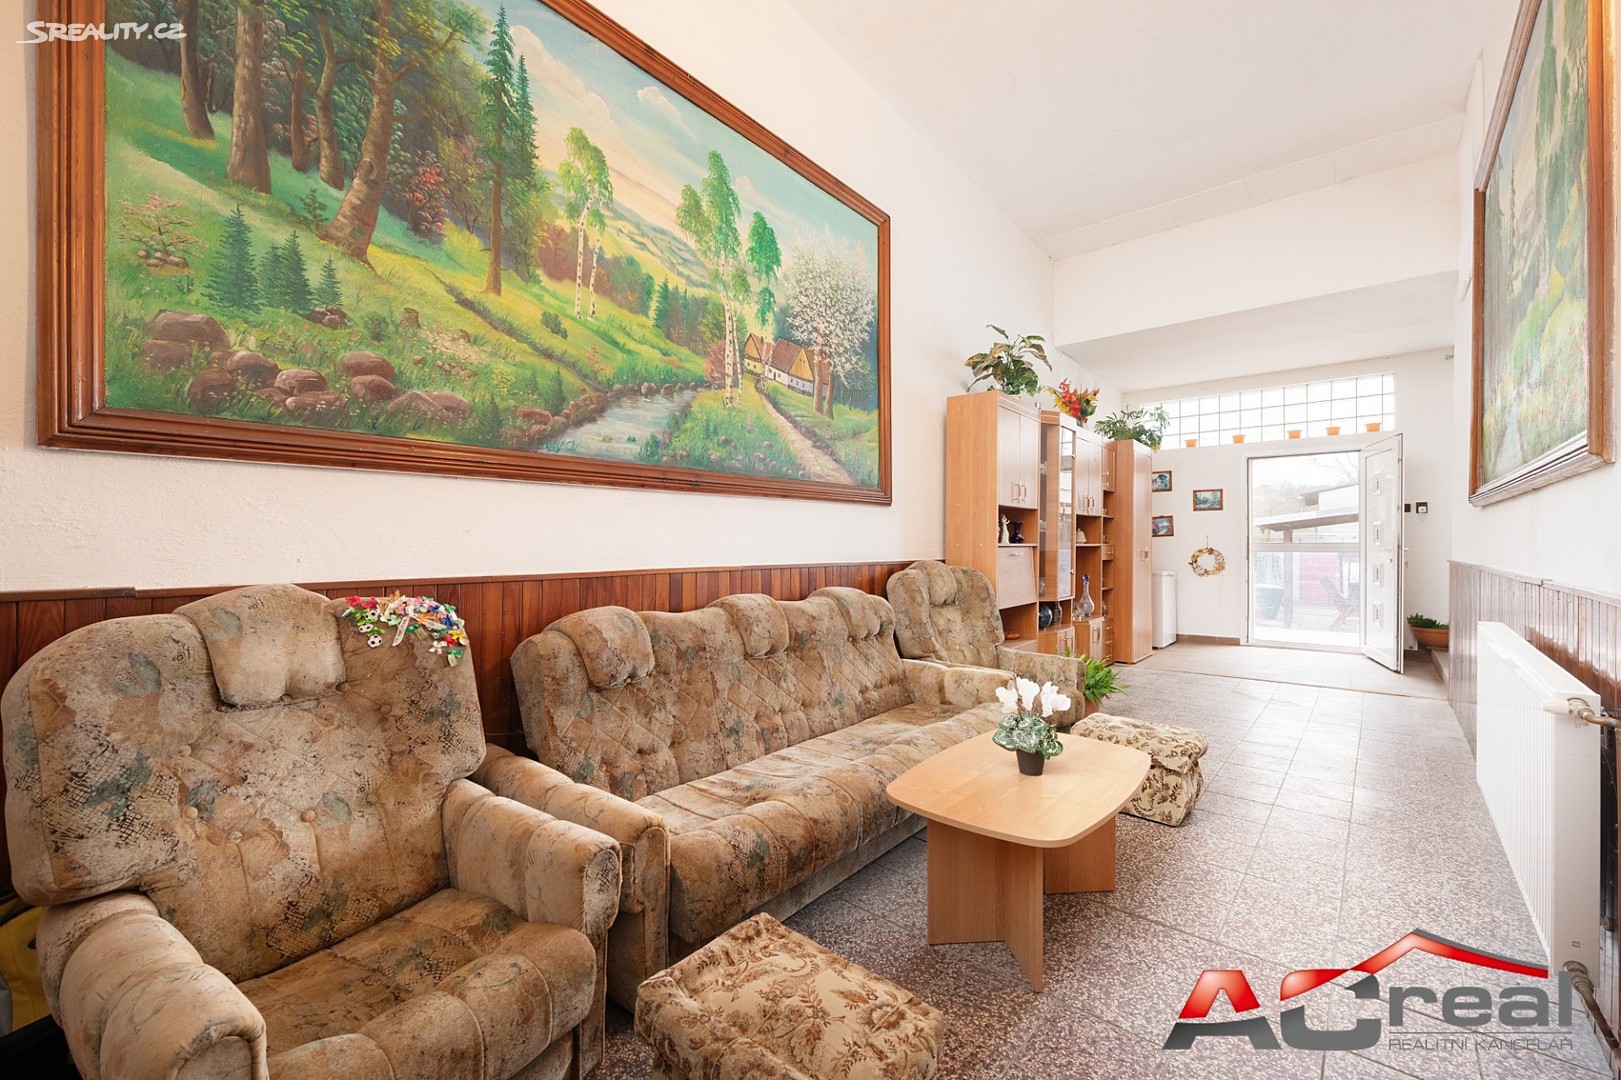 Prodej  rodinného domu 150 m², pozemek 273 m², Těšany, okres Brno-venkov